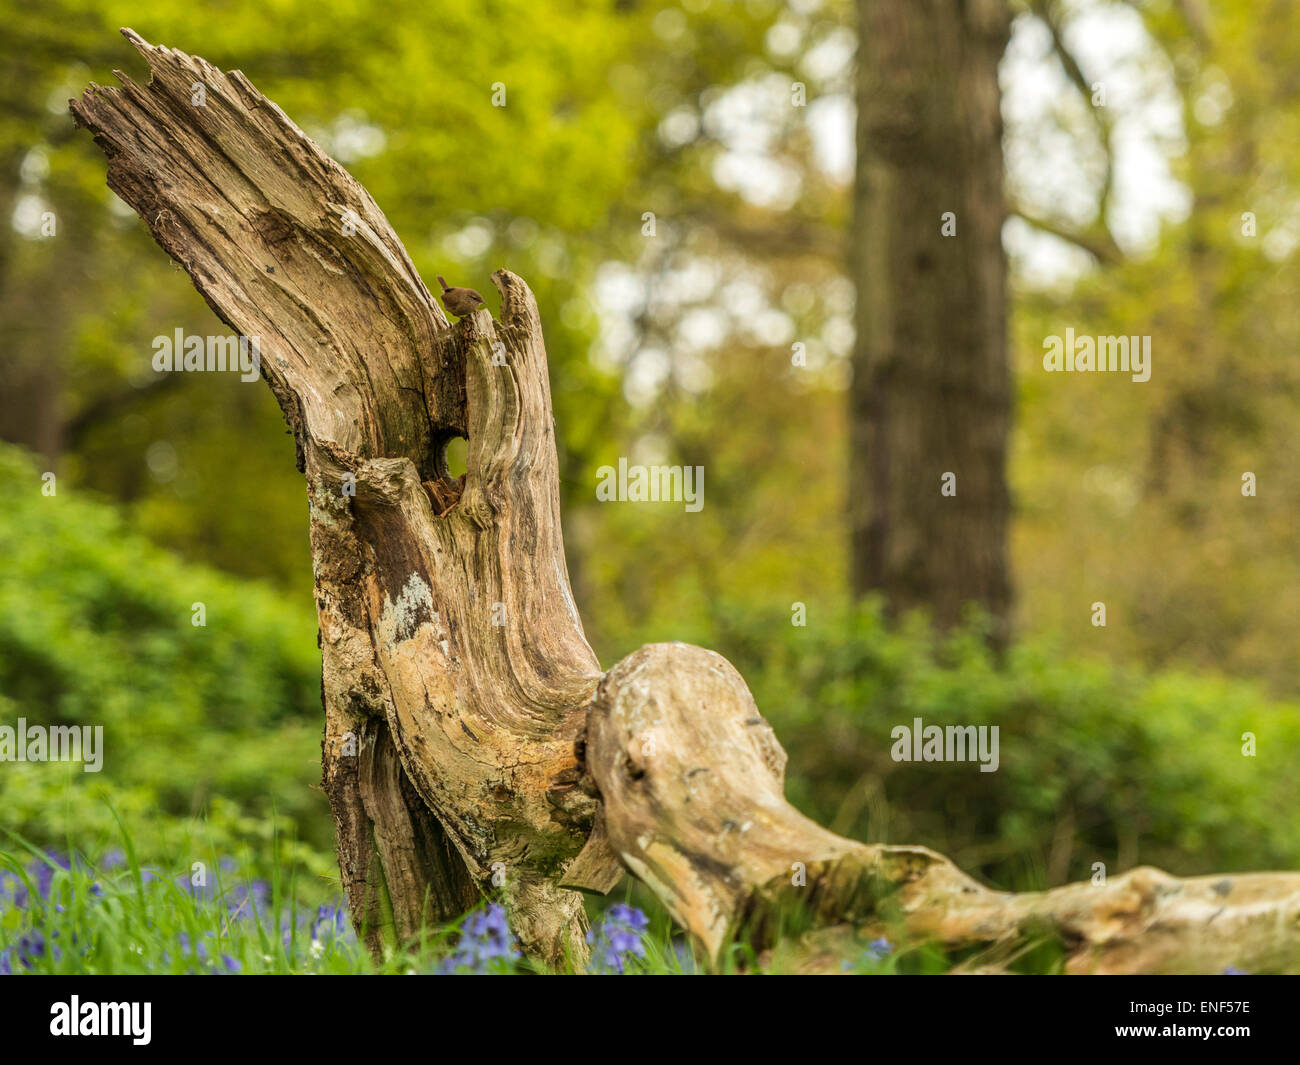 English Country Wildlife - Wren (Troglodytidae) Perched on Wooden Stump Stock Photo